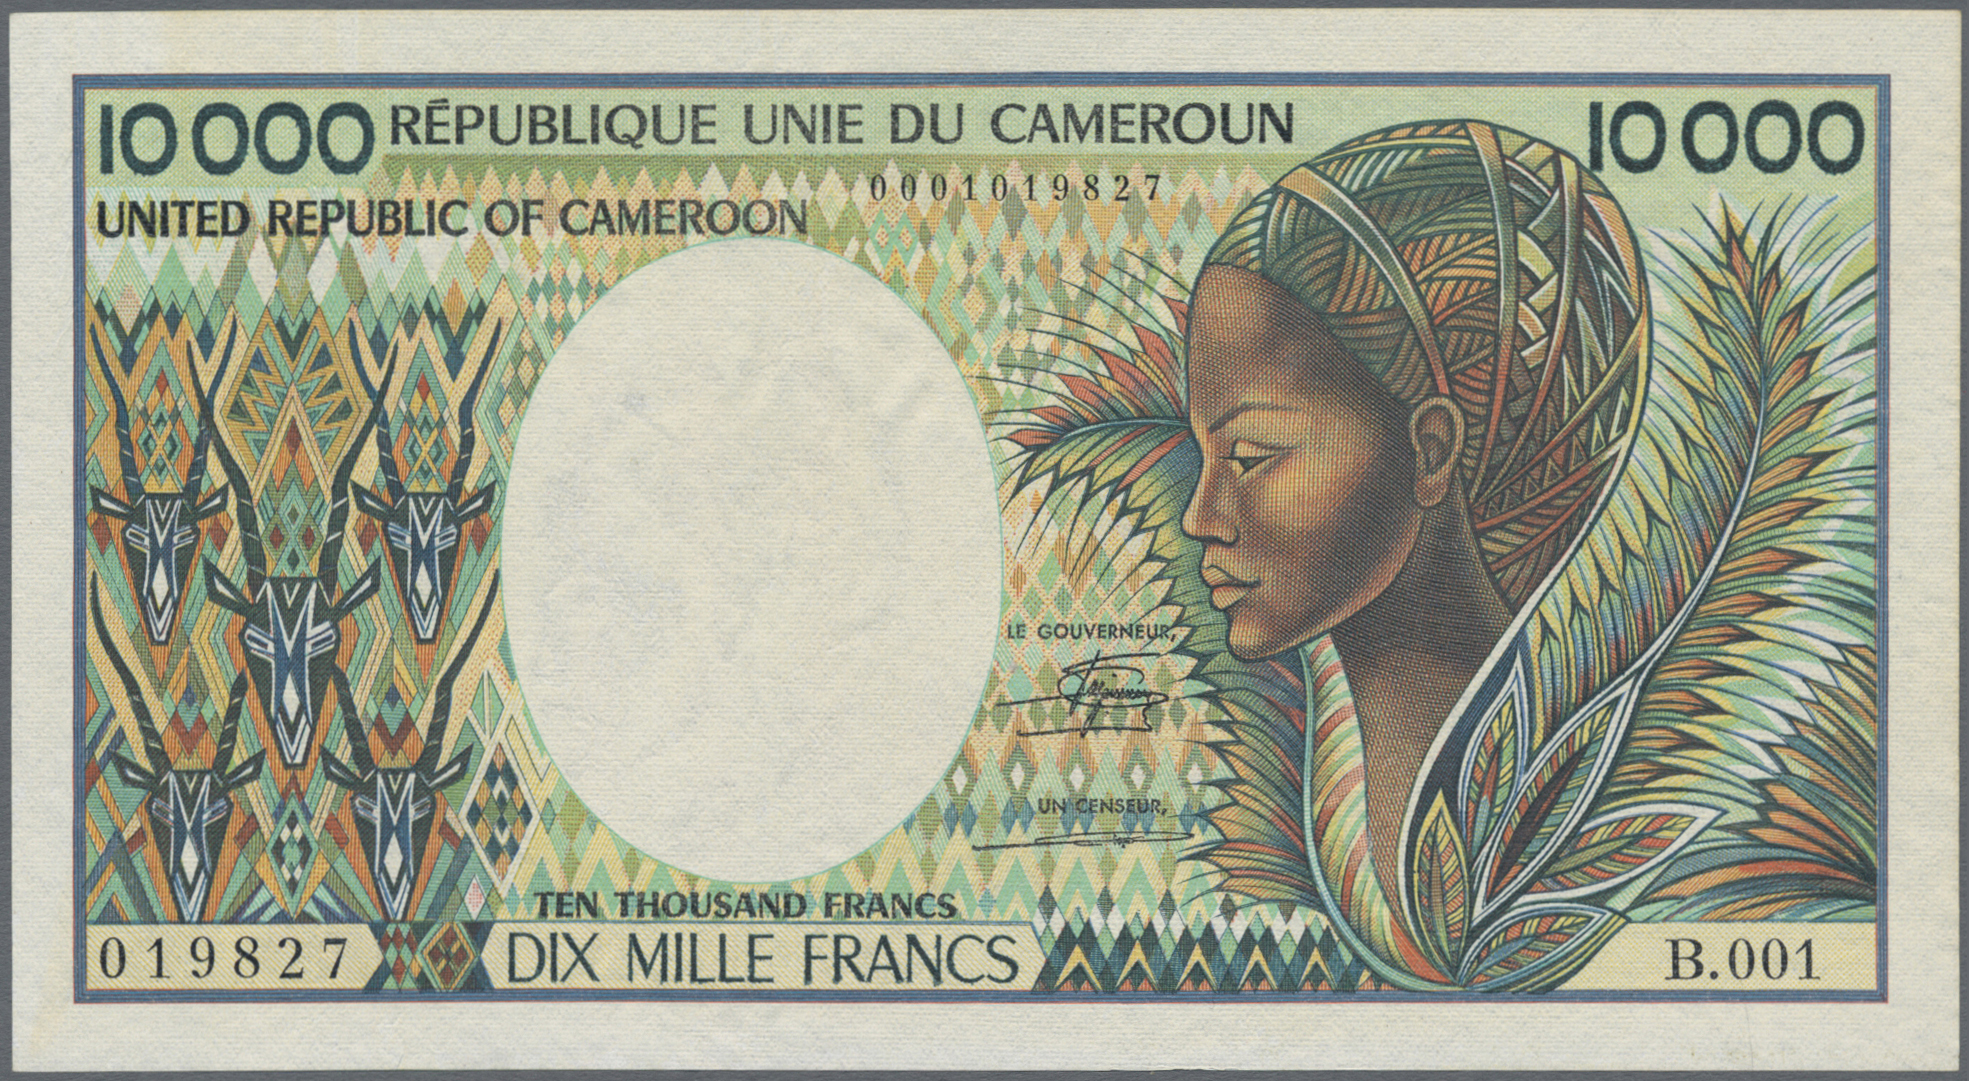 Lot 00248 - Cameroon / Kamerun | Banknoten  -  Auktionshaus Christoph Gärtner GmbH & Co. KG 56th AUCTION - Day 1